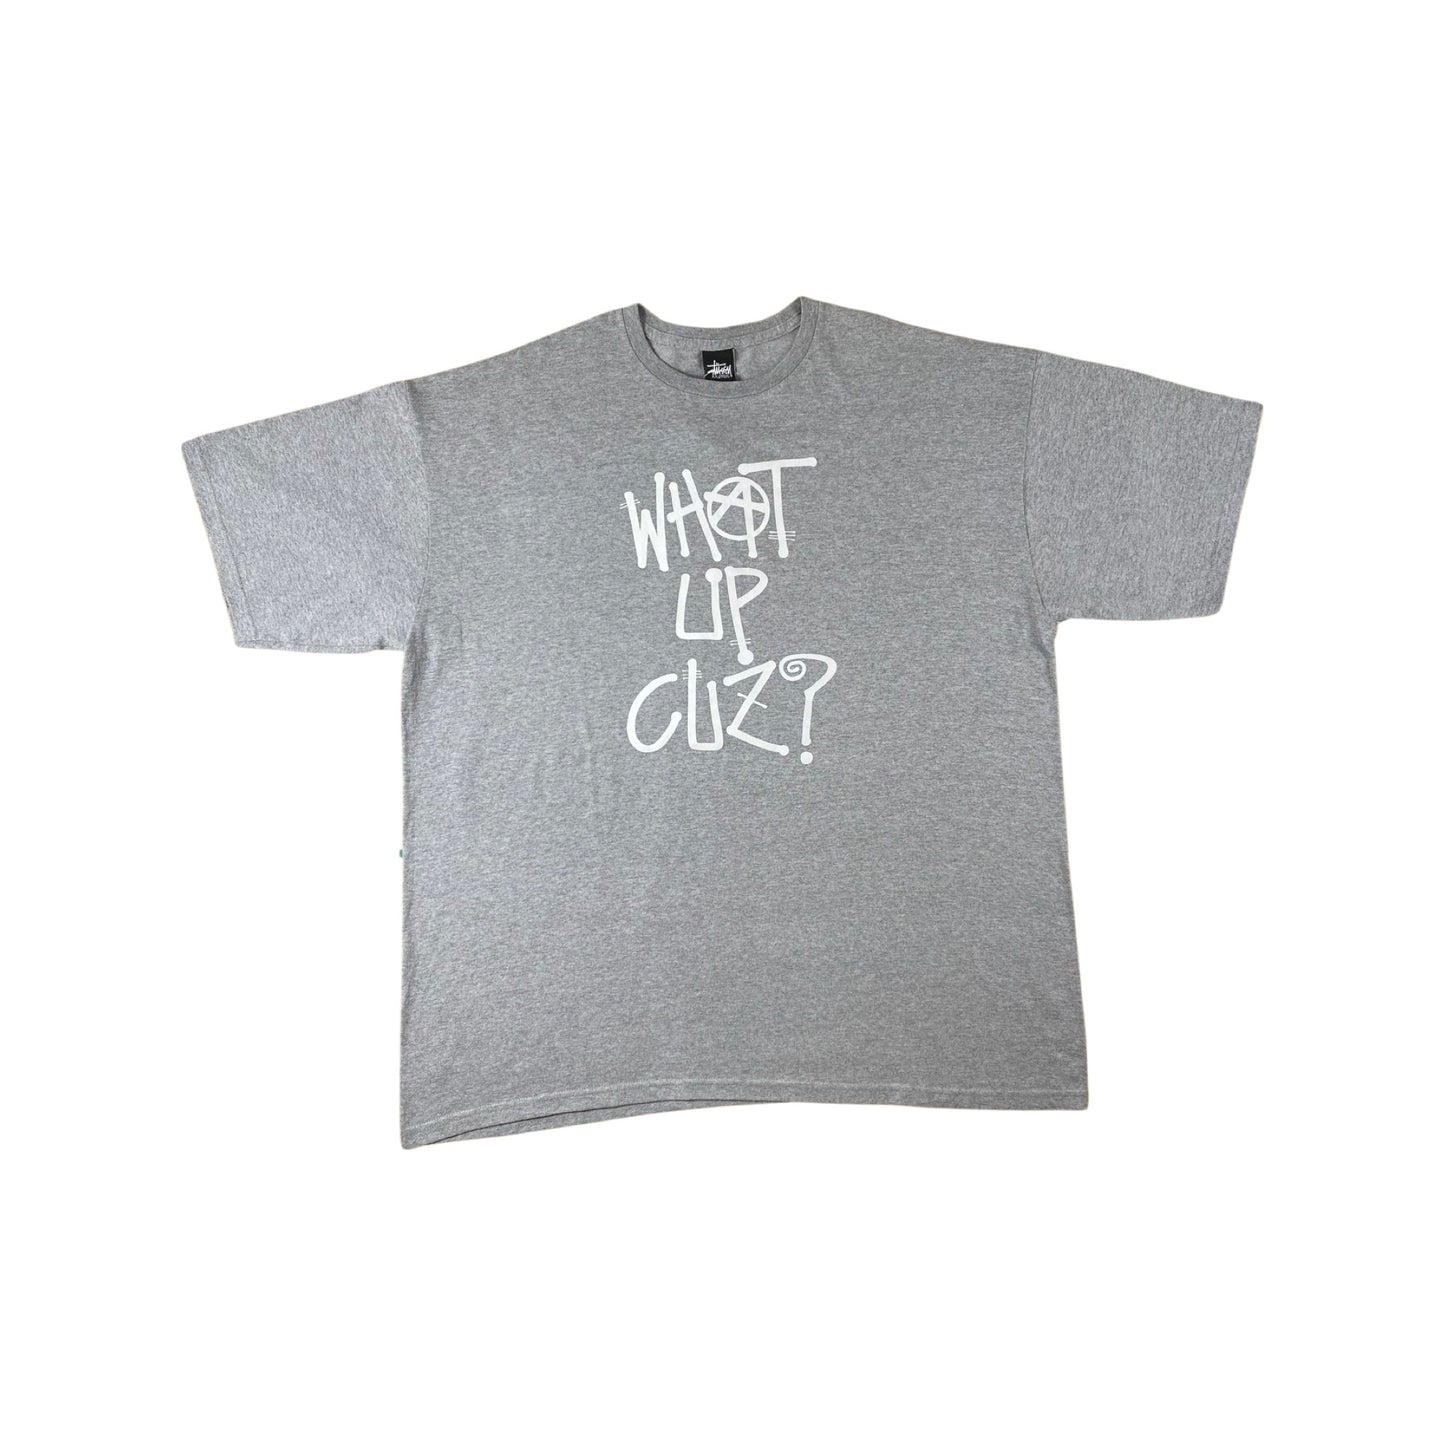 Stüssy T-Shirt “What up cuz?” -grey heather